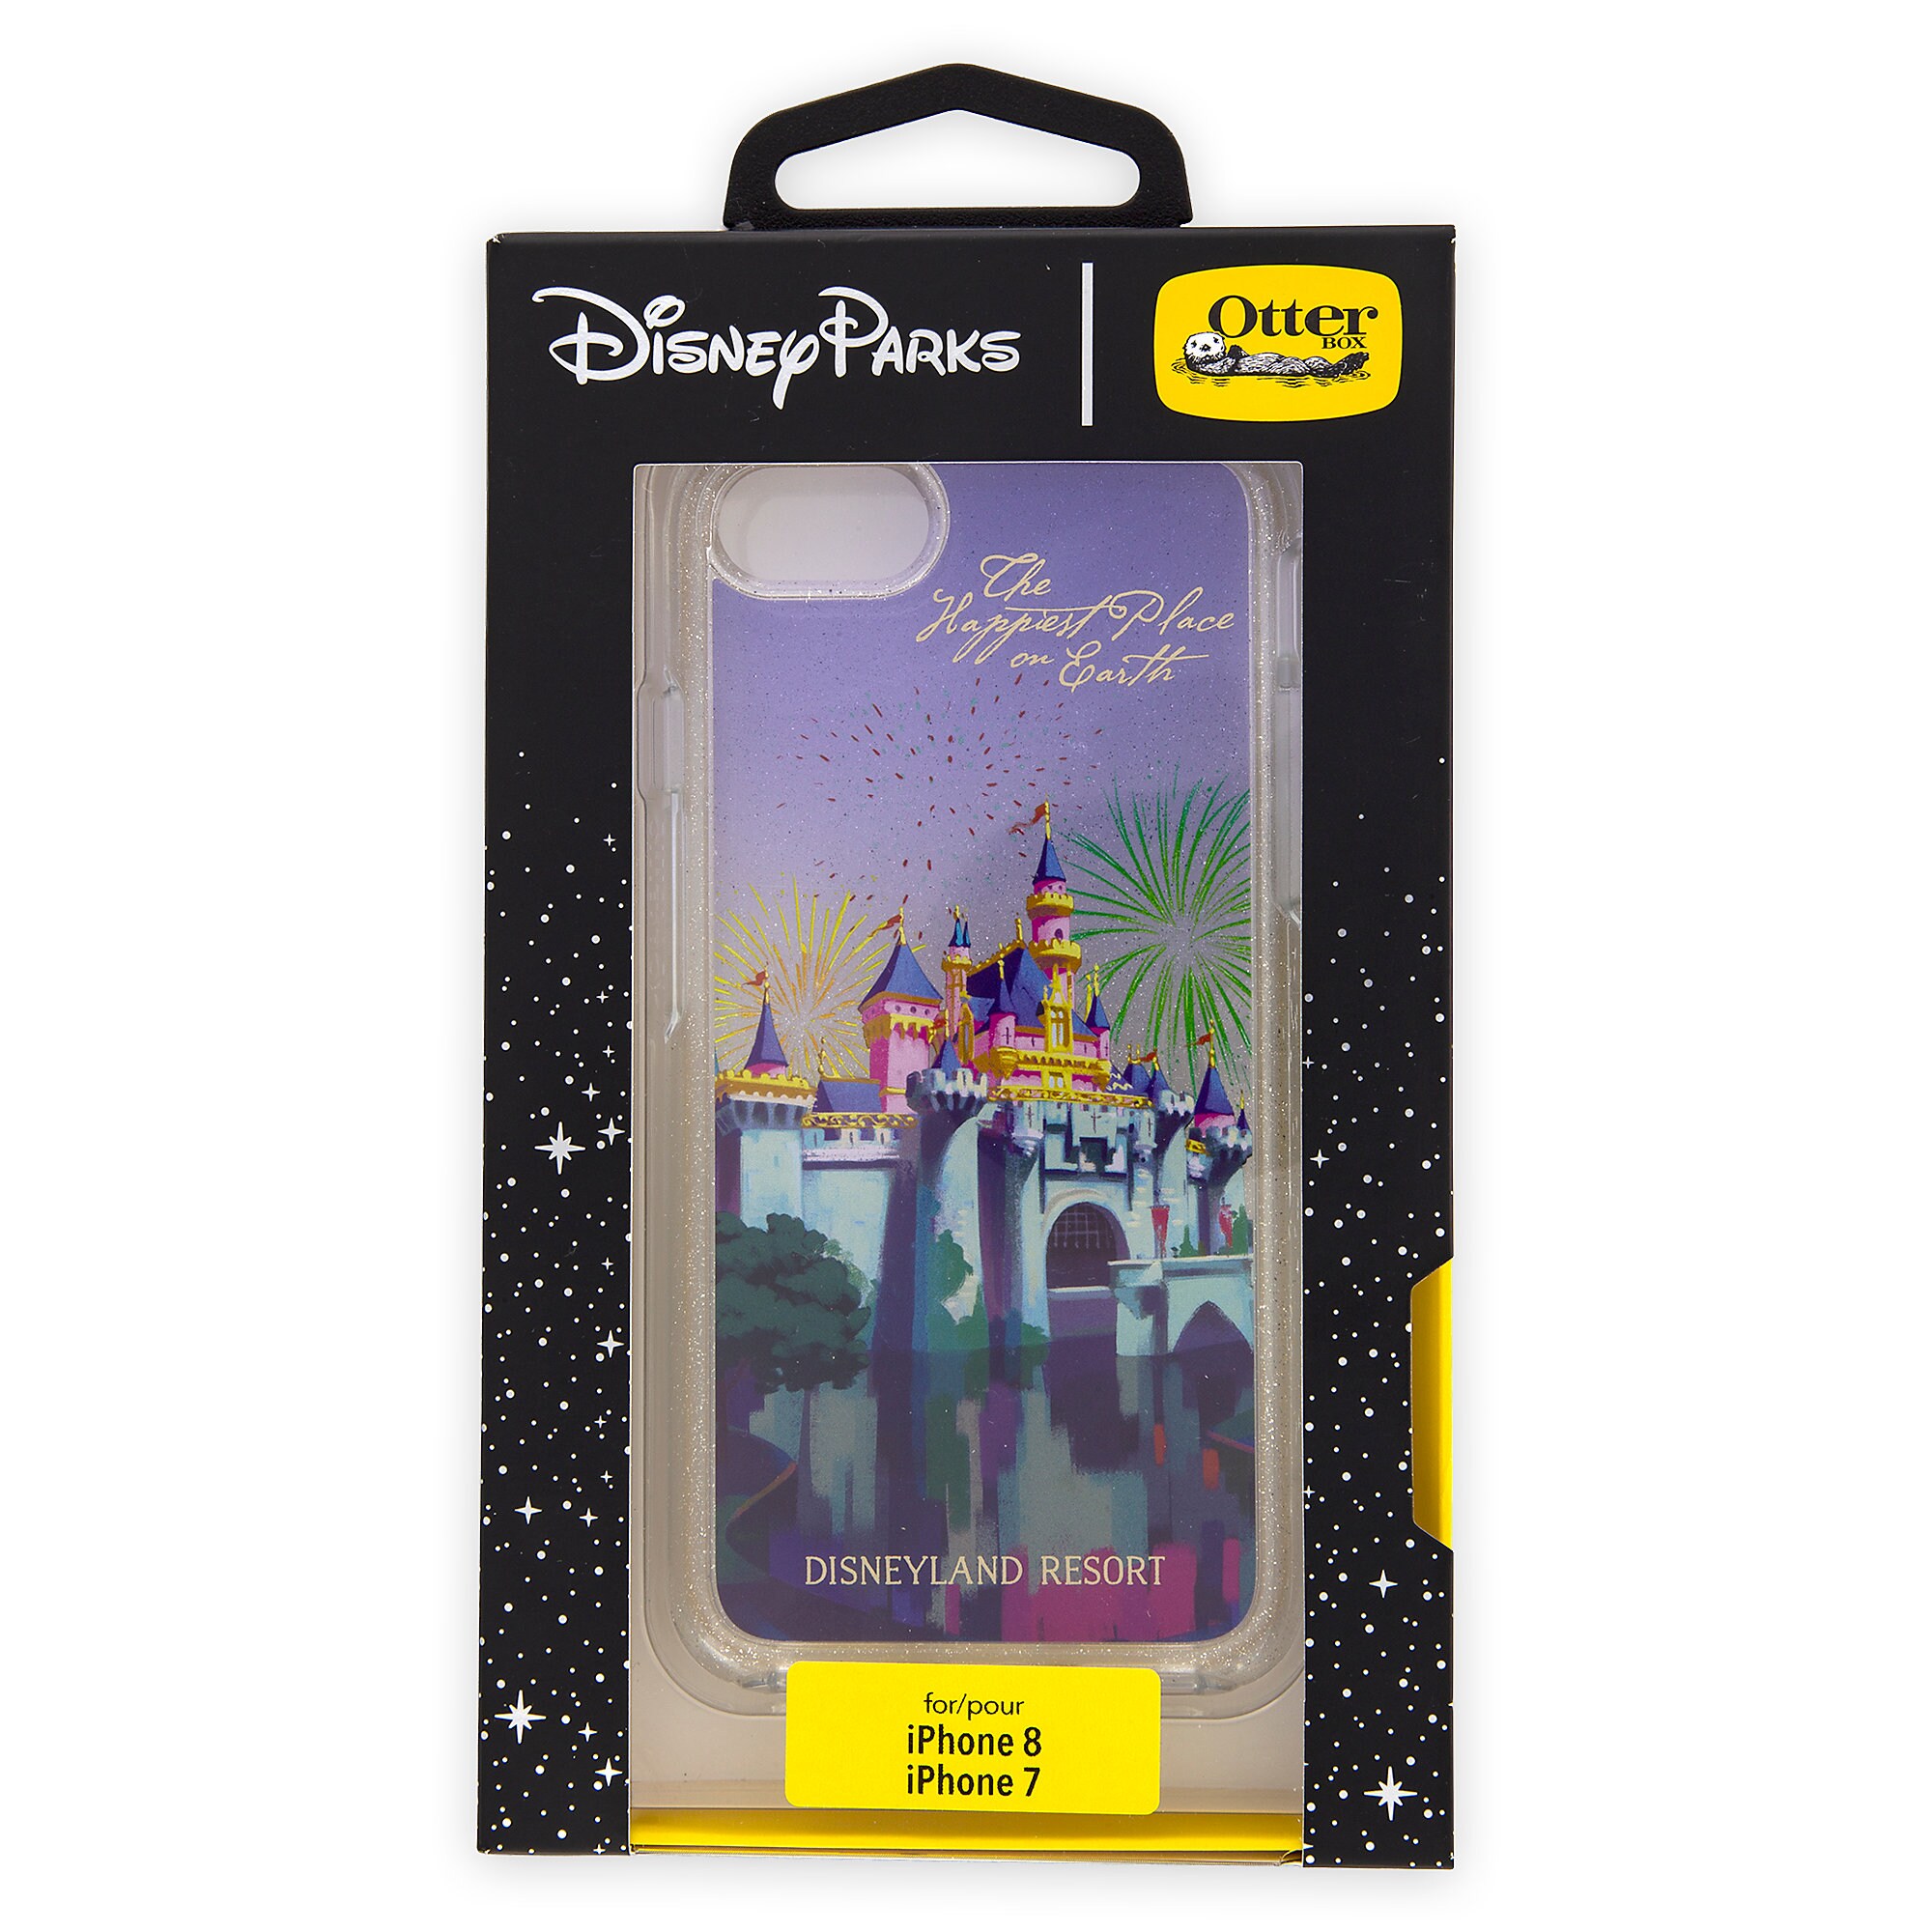 Sleeping Beauty Castle iPhone 8/7 Case by OtterBox - Disneyland